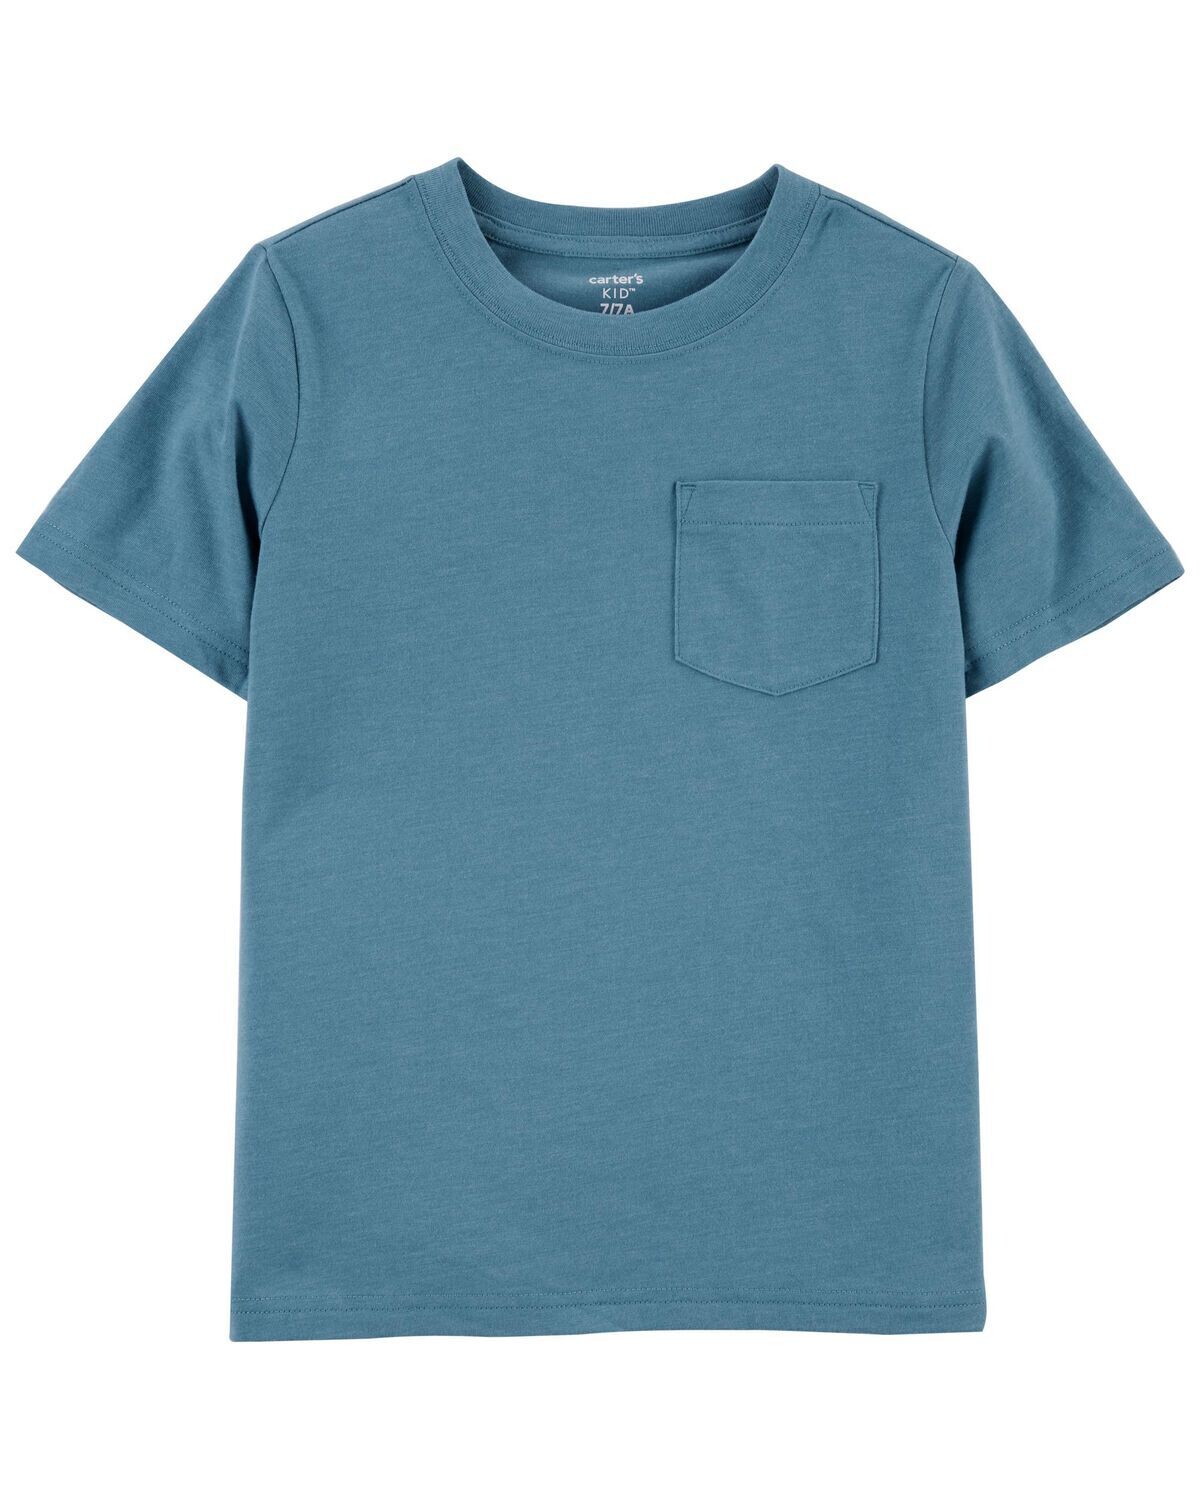 Original Carter&#39;s Kid Pocket Jersey Tee, Size: 7Y, Color: Blue